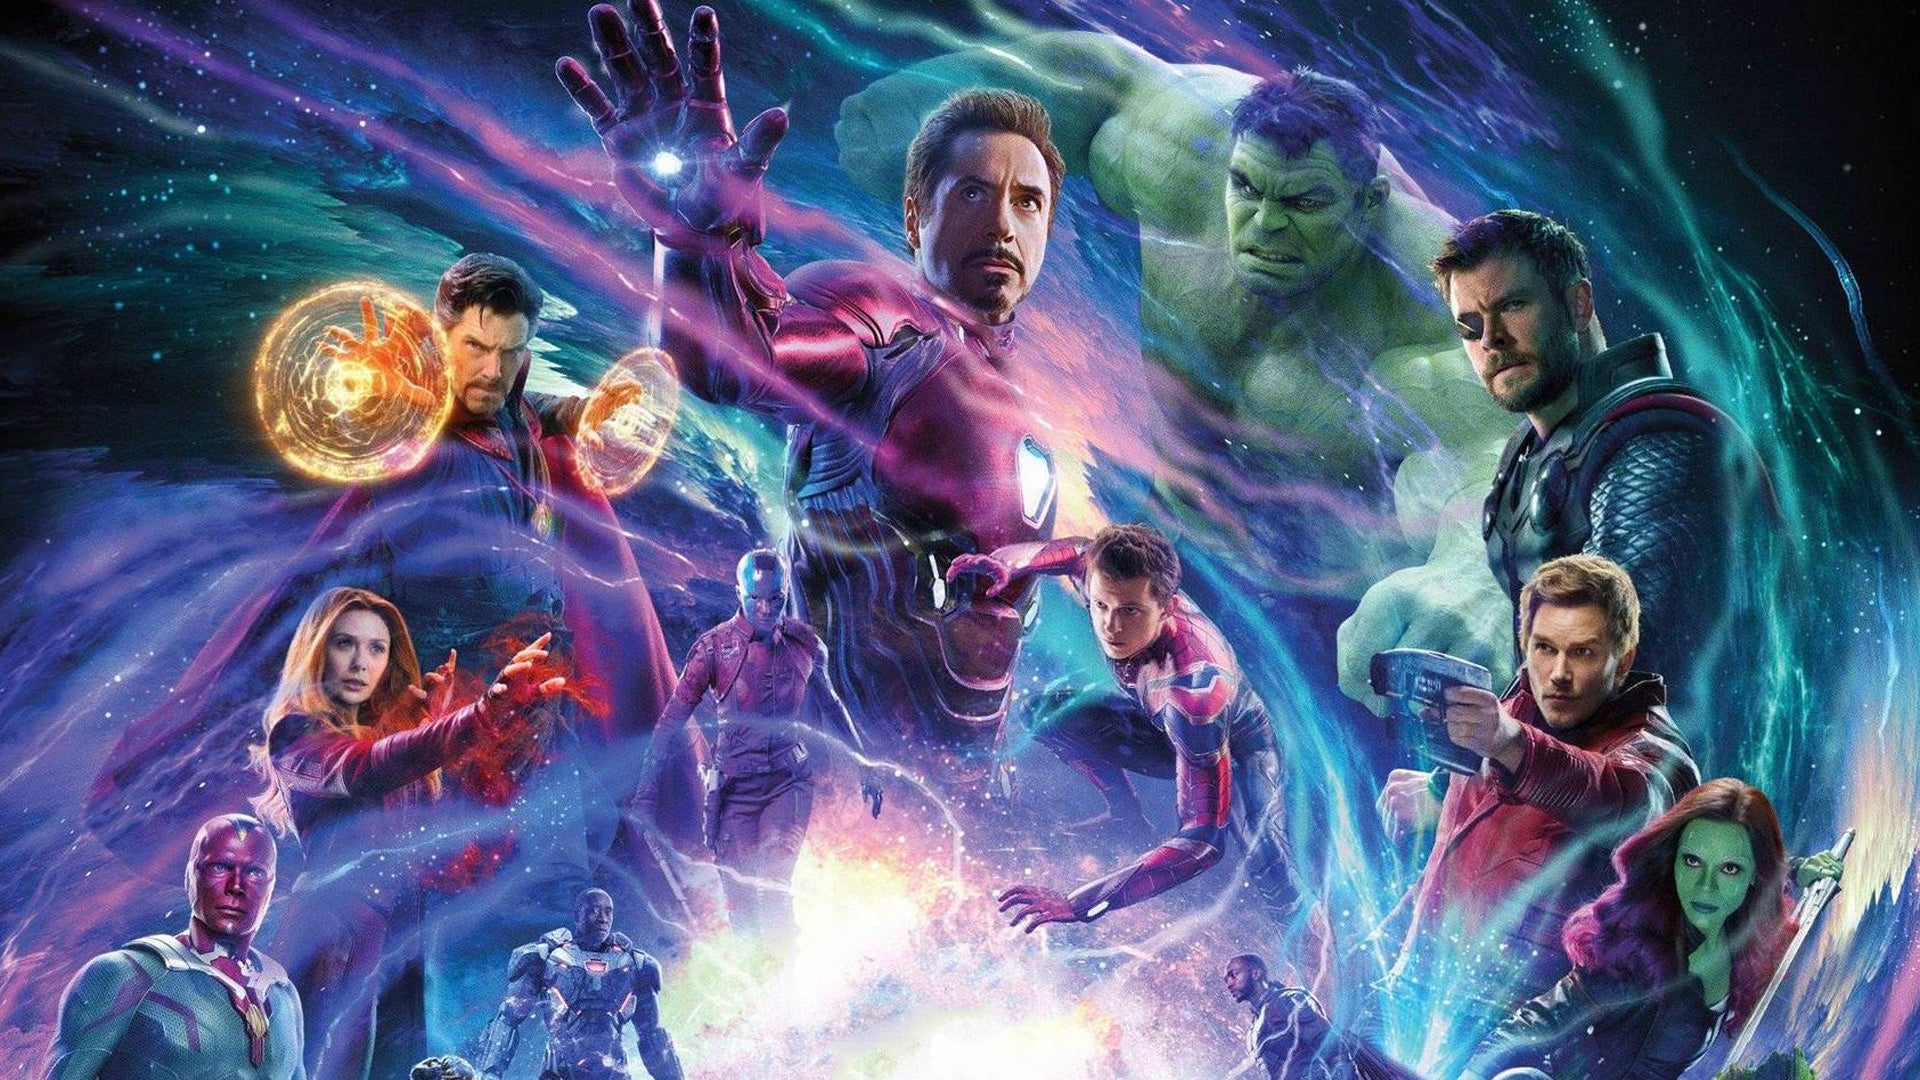 Marvel's Avengers: Infinity War - 4K Limited Edition SteelBook